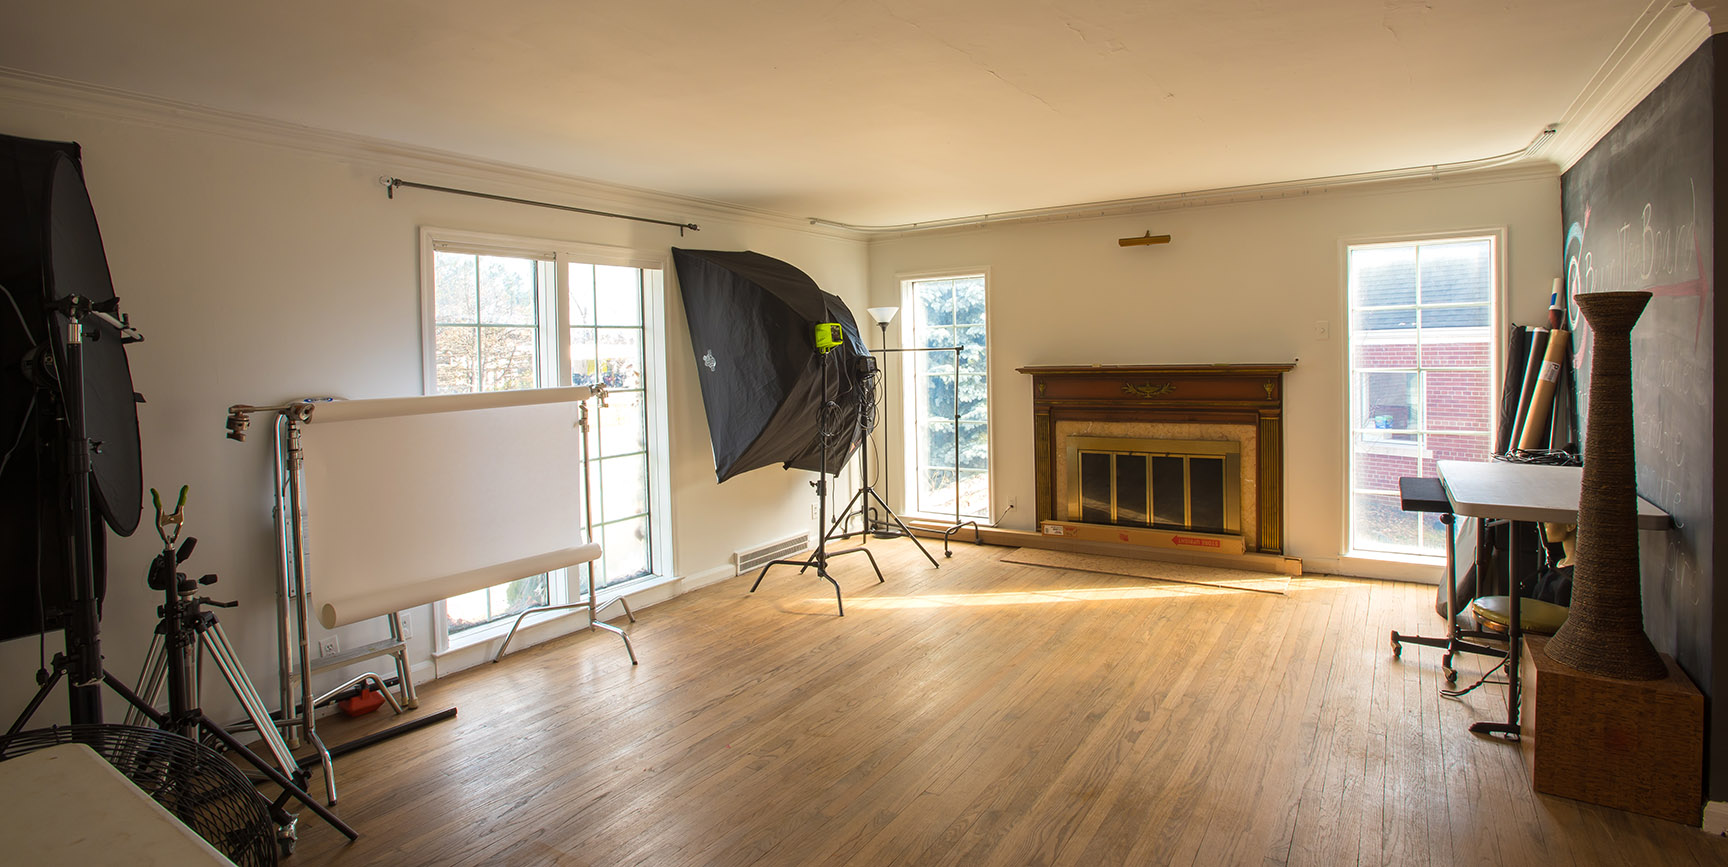 Our New Metro Detroit Photography Studio, “White House Studio” in Pleasant Ridge, Michigan